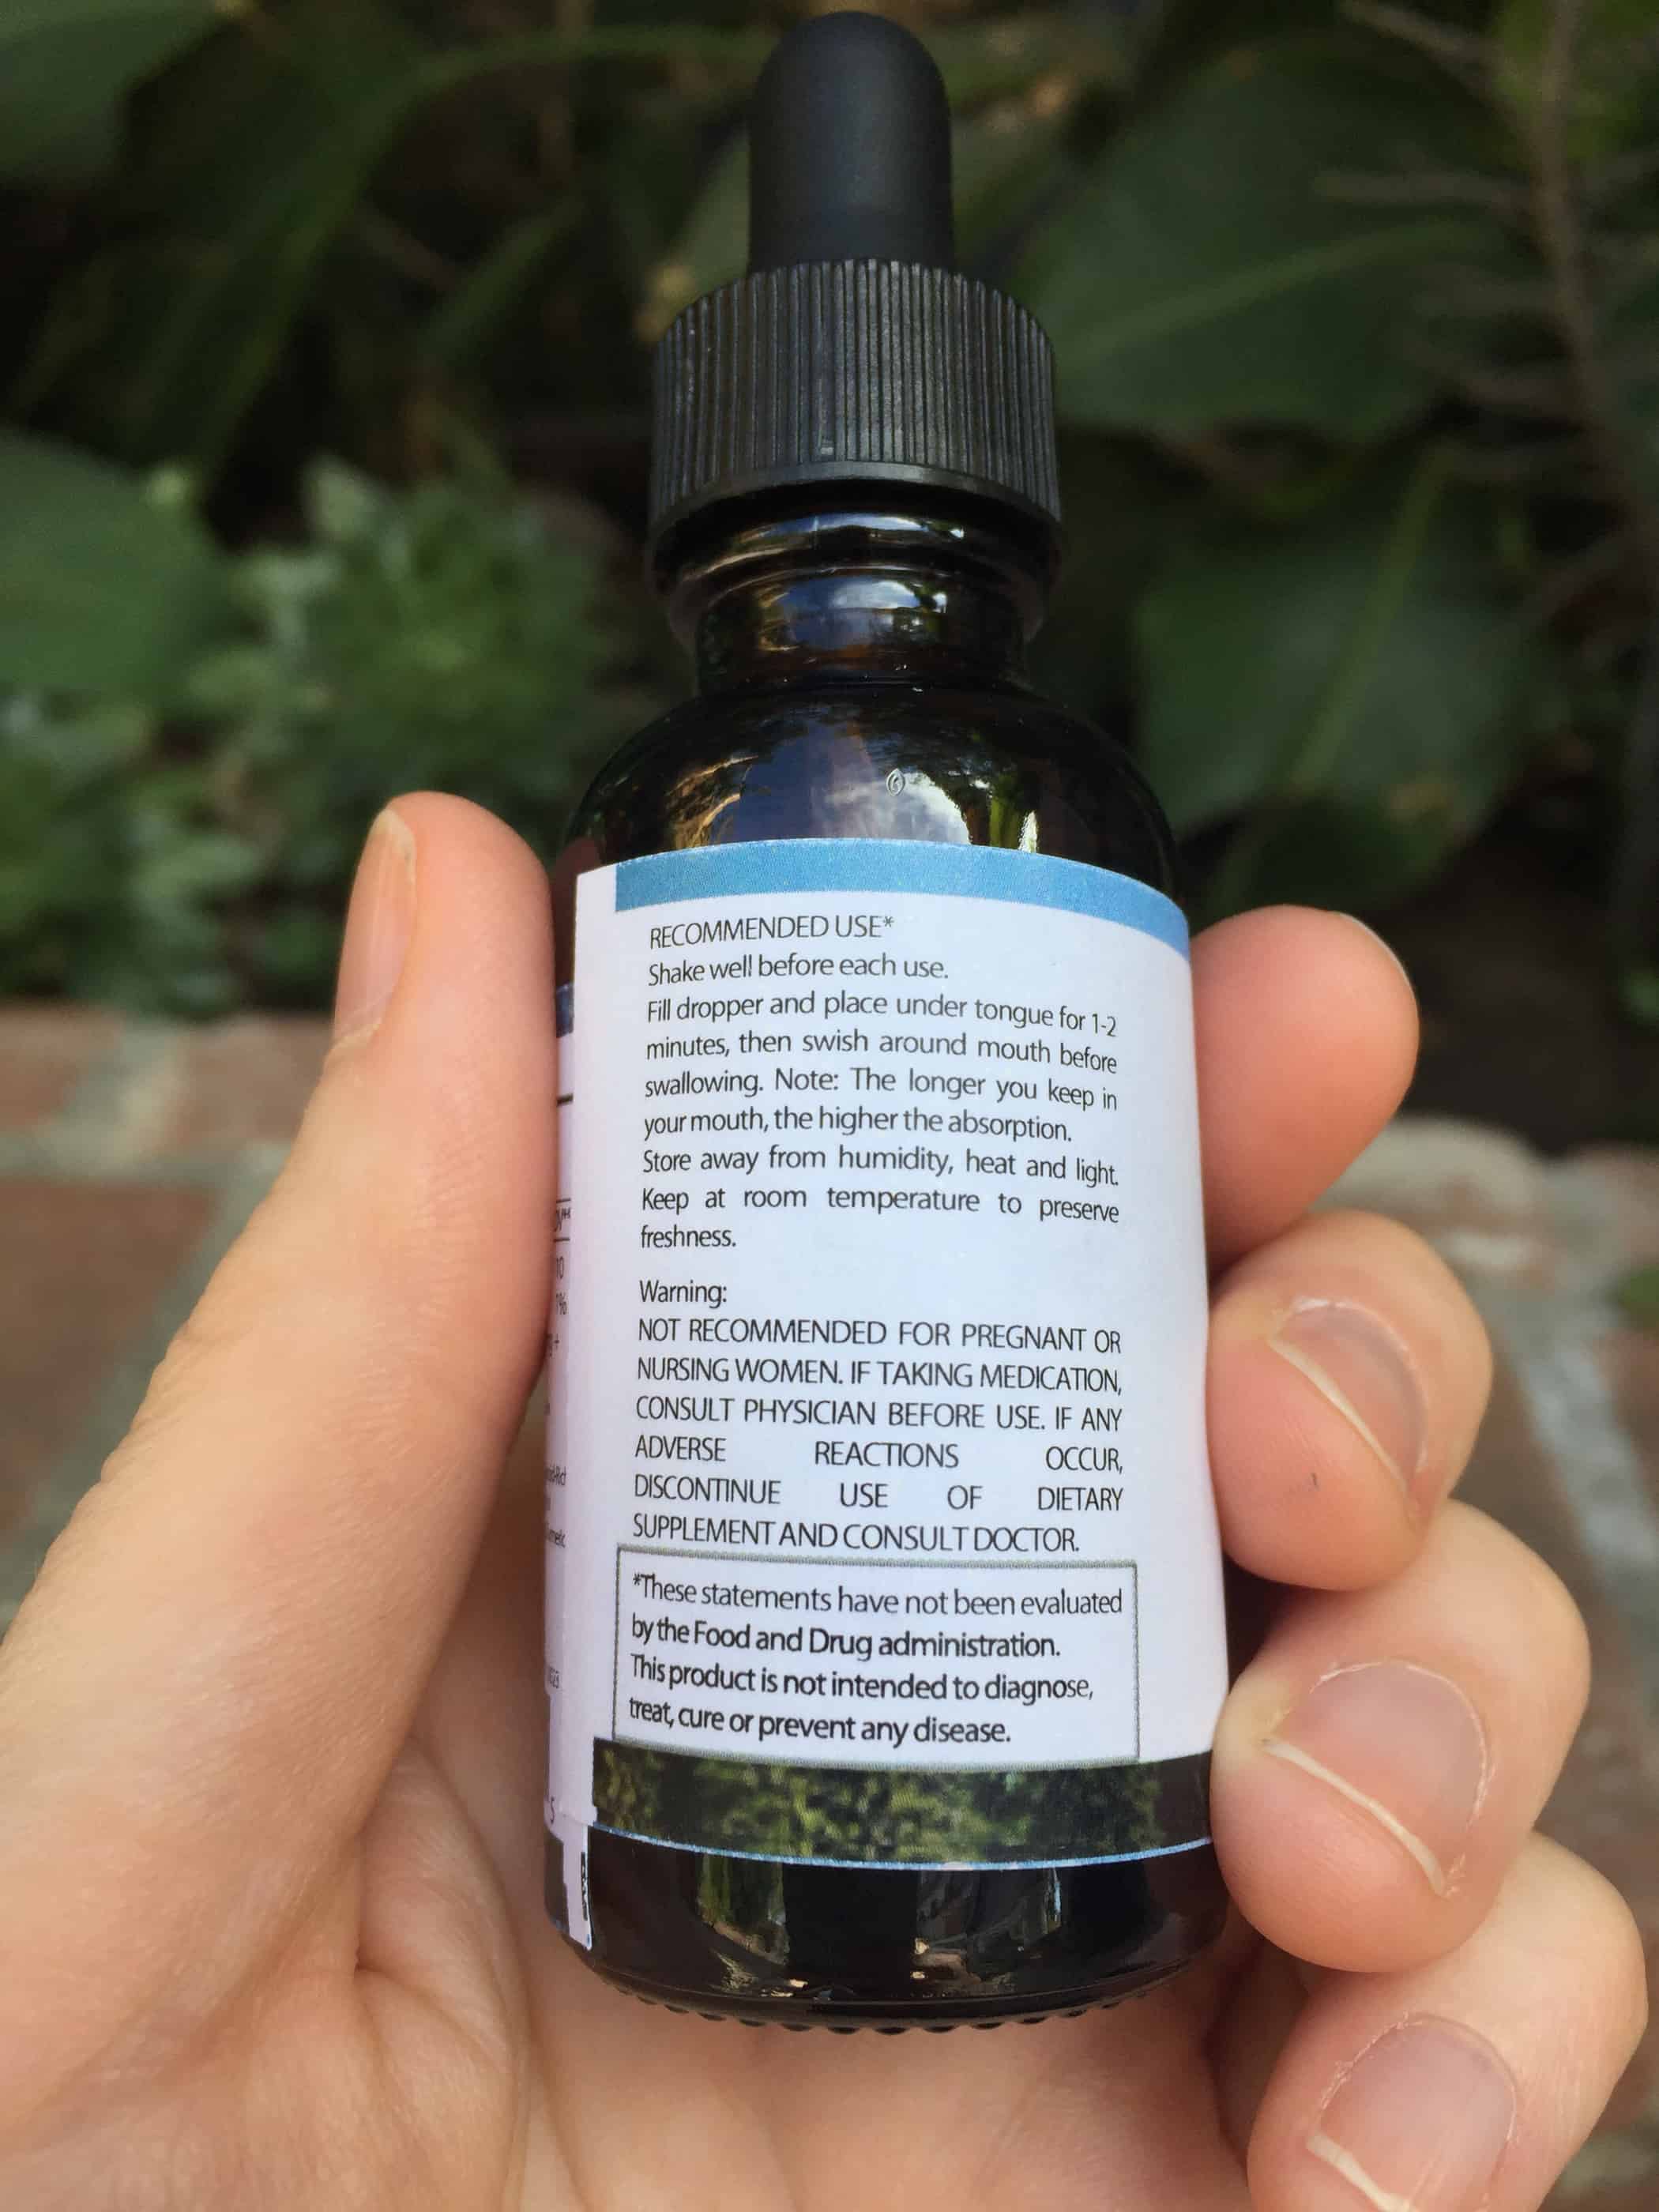 hoboken hemp co eucalyptus blend cbd oil 250 mg review testing process